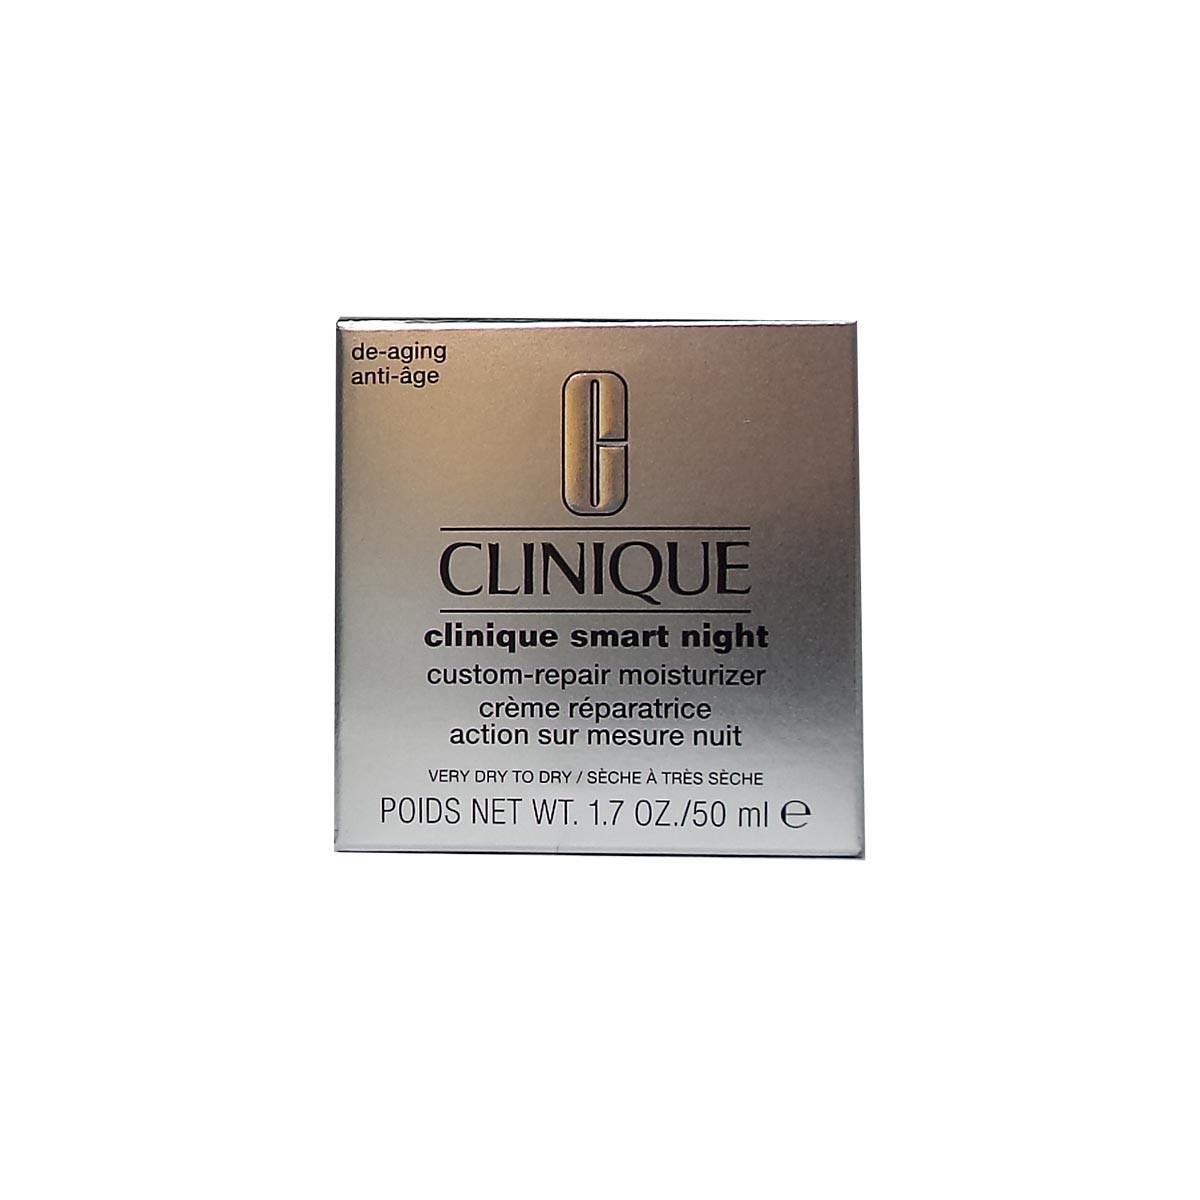 clinique-gradde-smart-night-custom-repair-moisturizer-antiage-seche-a-tres-seche-50ml